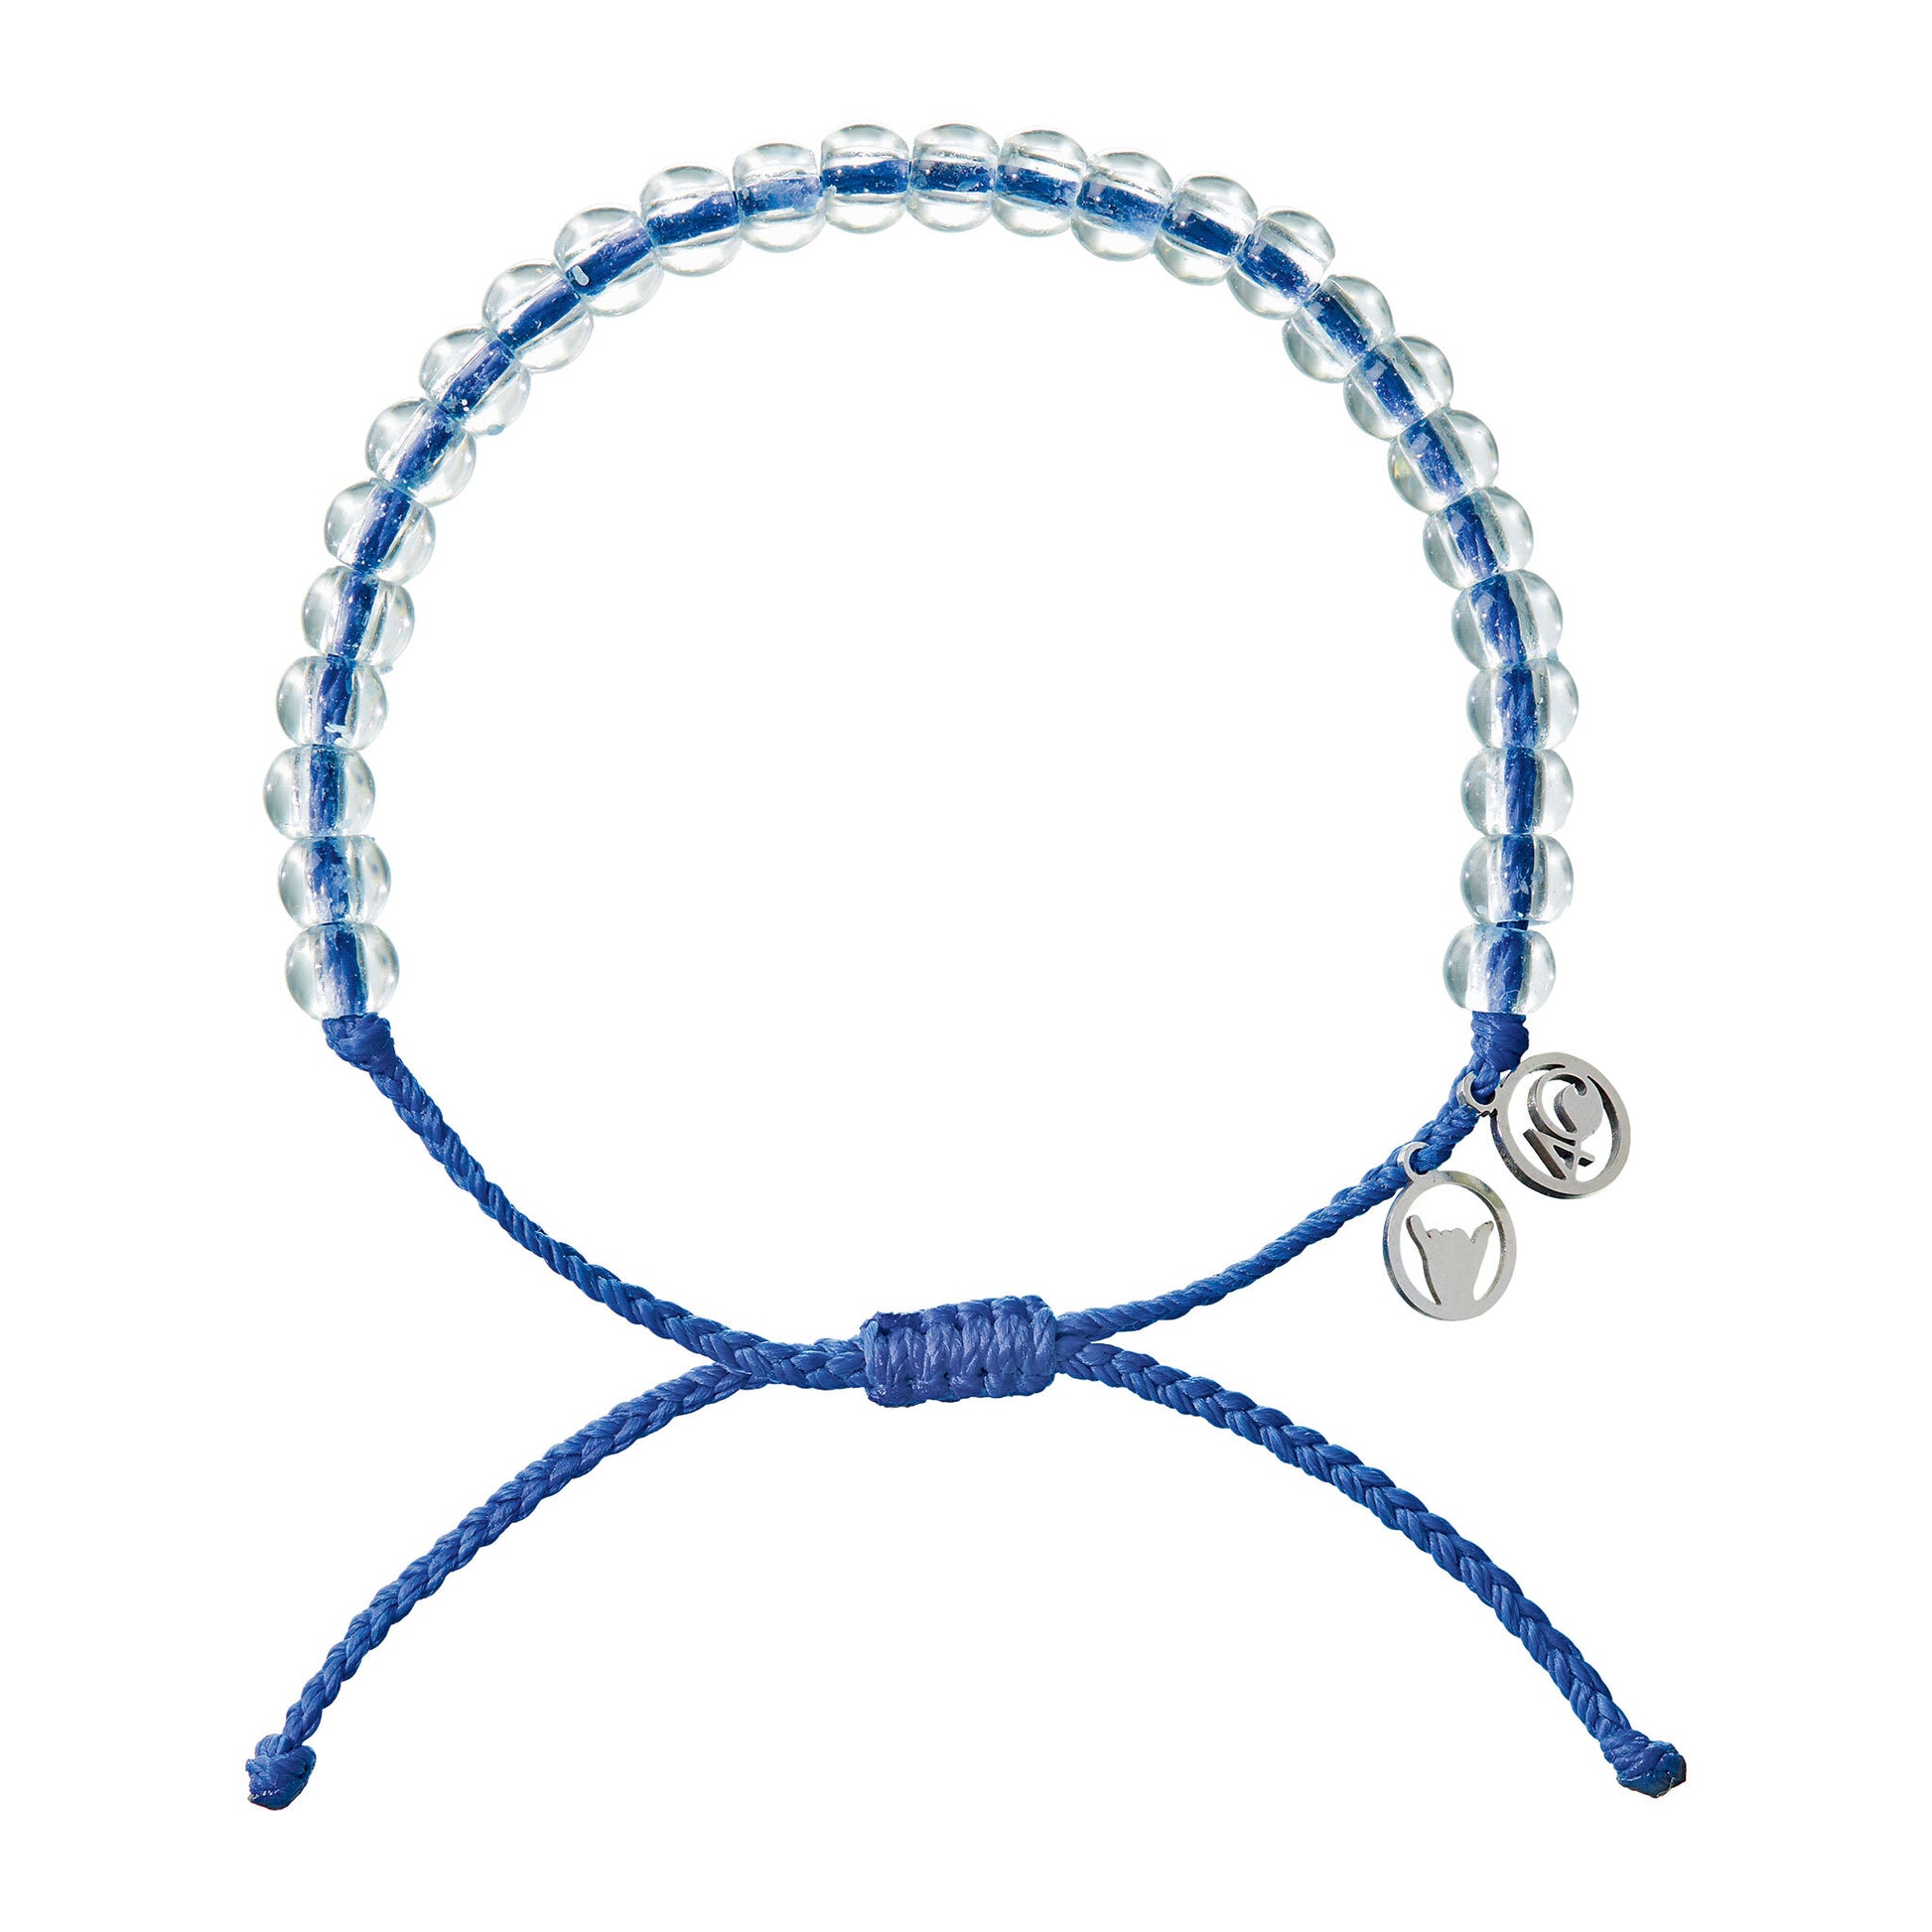 The Ocean Plastic Cuff Bracelet - Tikós